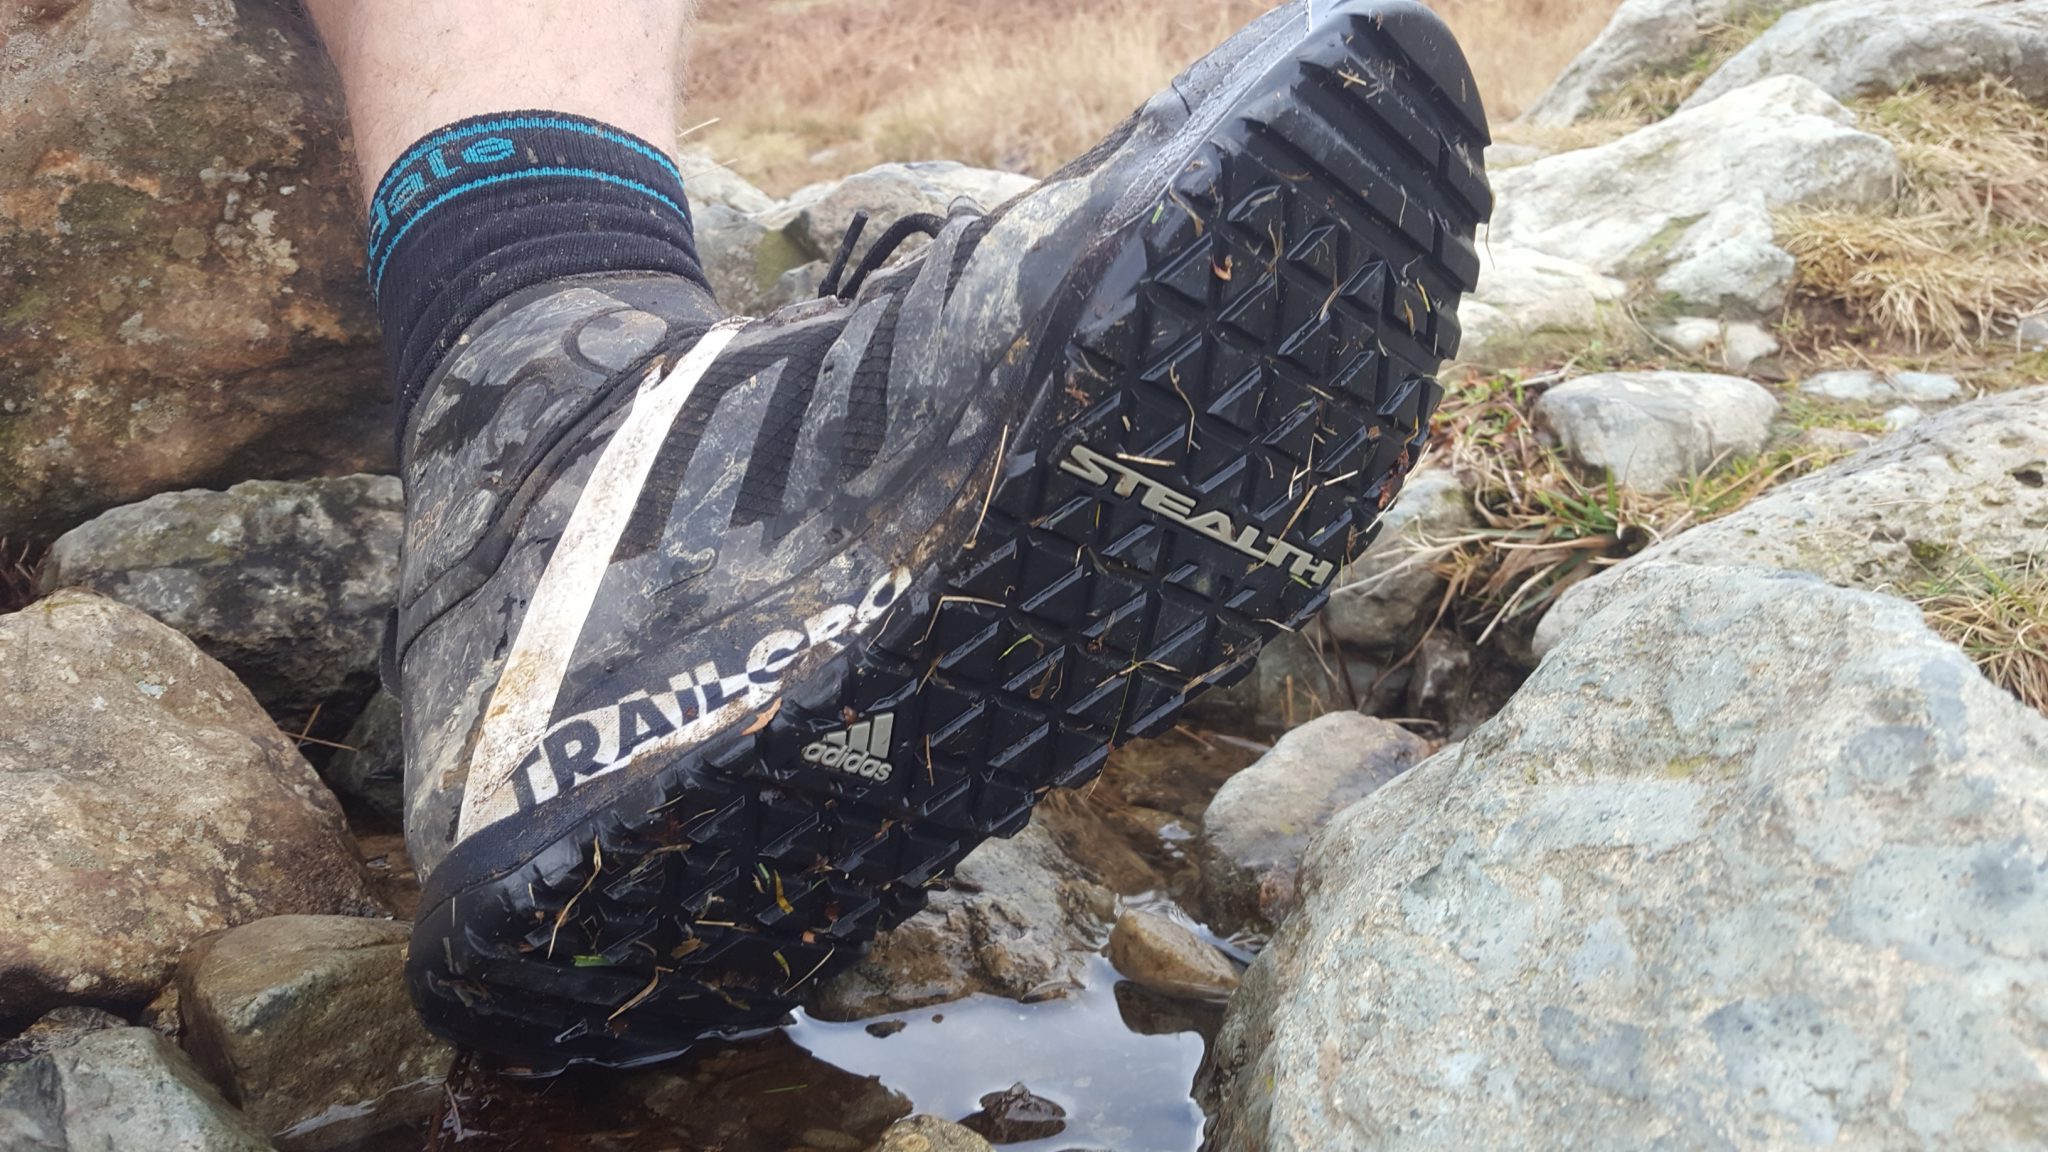 adidas terrex trail mtb shoes